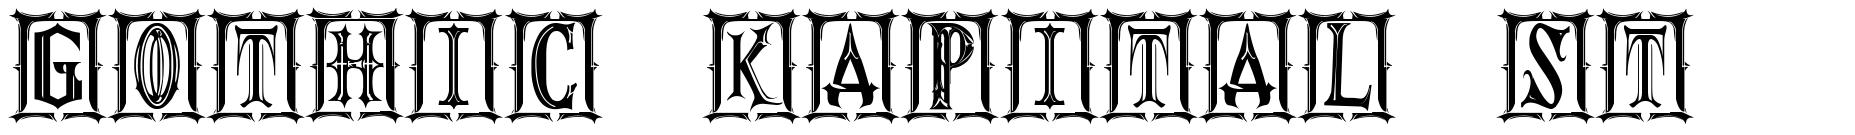 Gothic Kapital ST шрифт